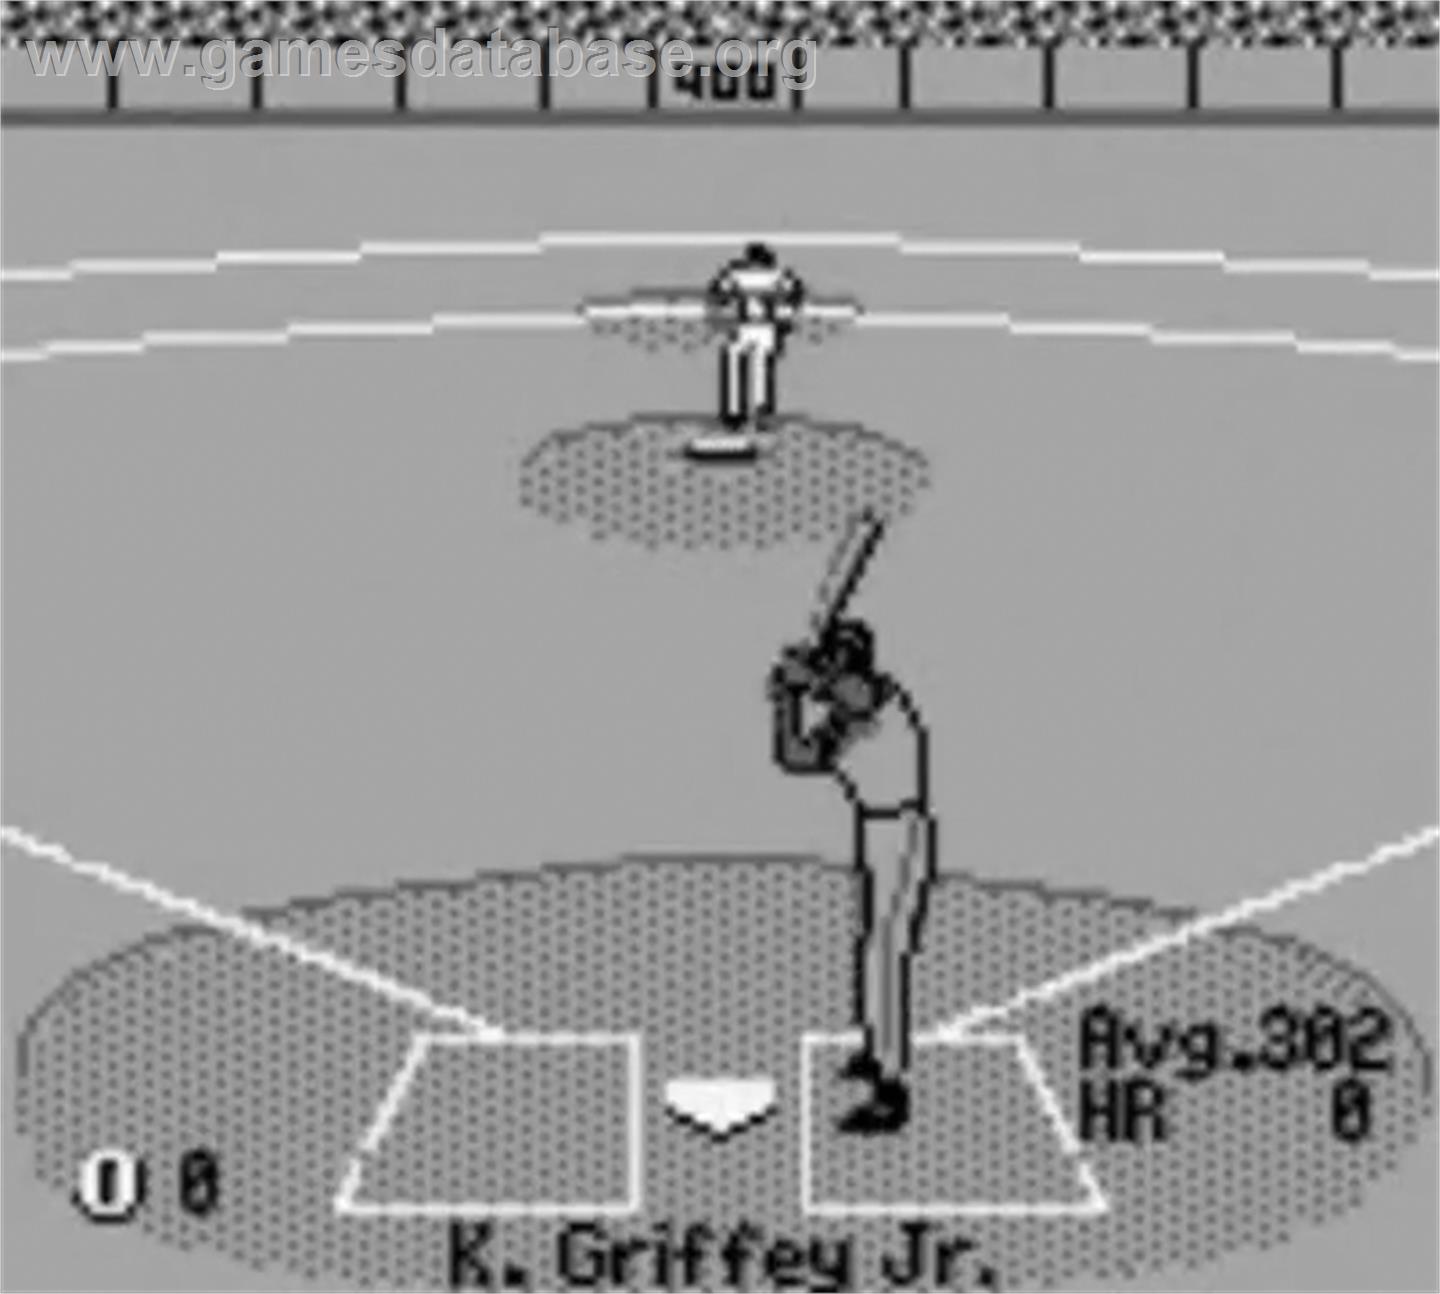 All-Star Baseball '99 - Nintendo Game Boy - Artwork - In Game